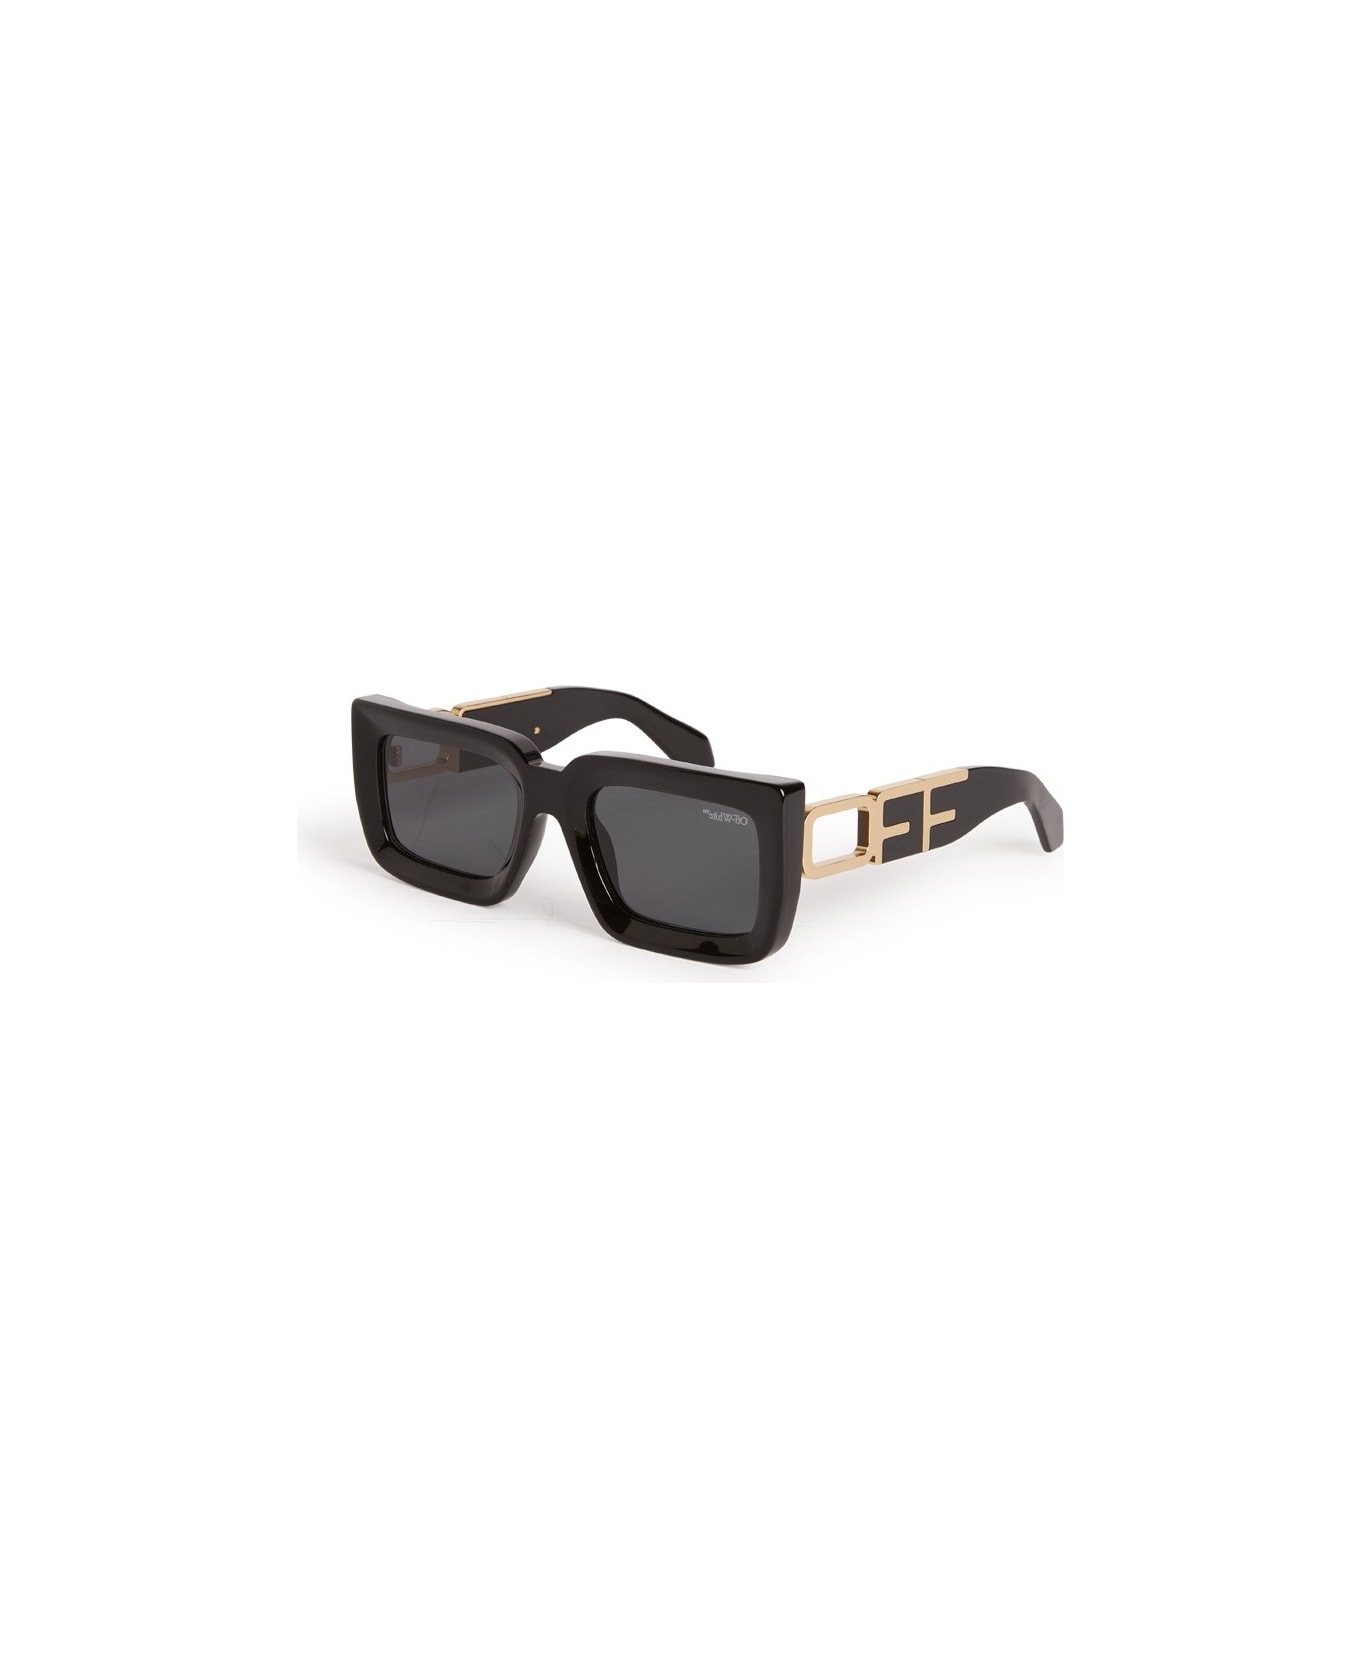 Off-White BOSTON SUNGLASSES Sunglasses - Black